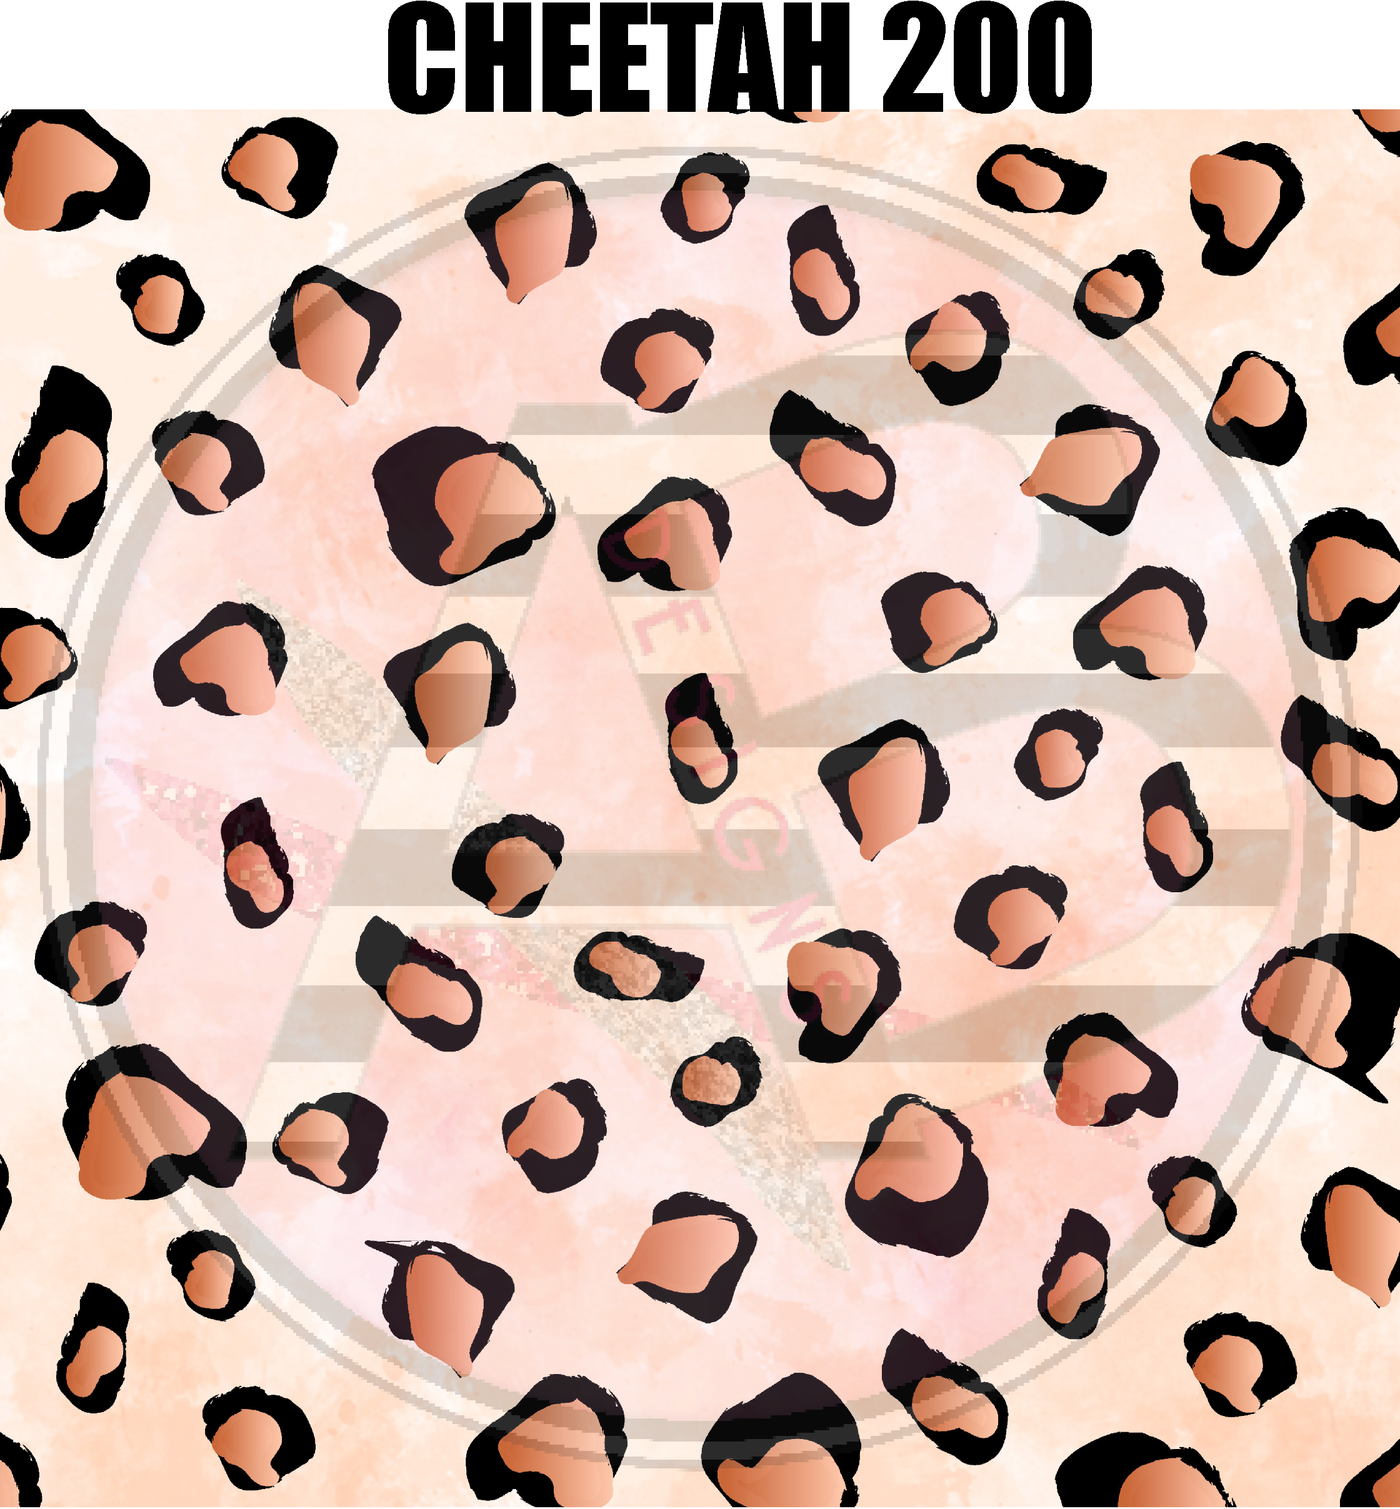 Adhesive Patterned Vinyl - Cheetah 200